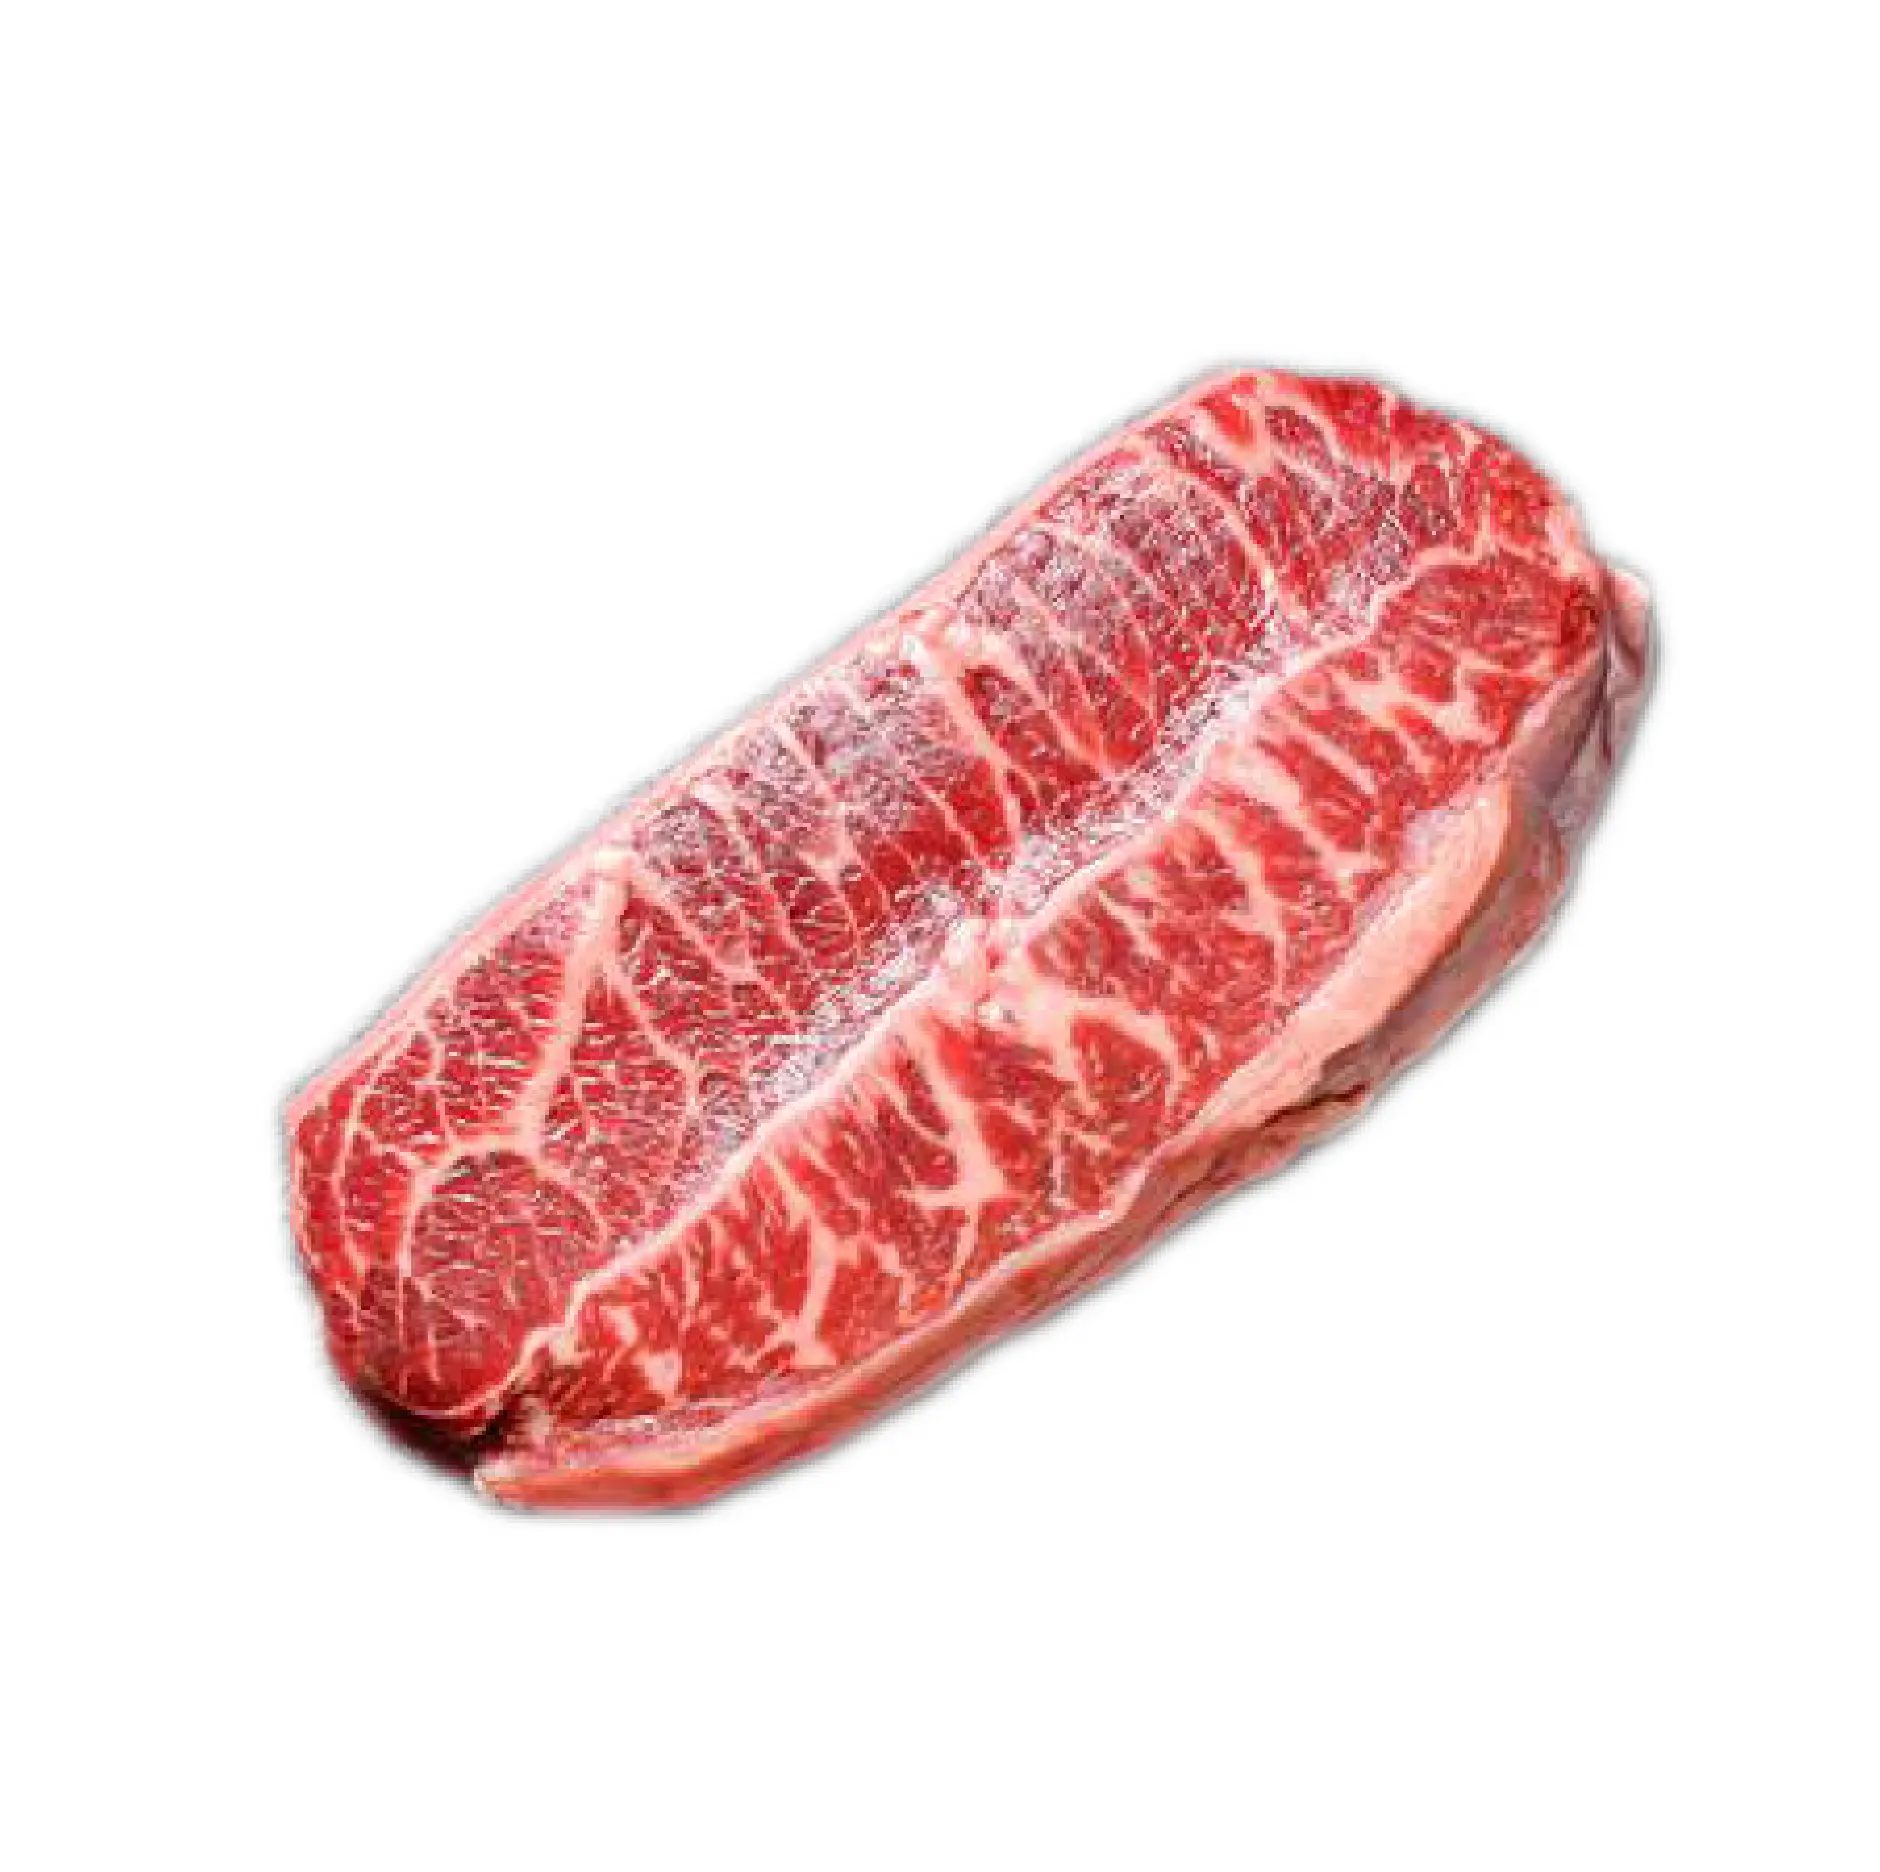 Oyster Blade Steak - 1kg Boneless Frozen Halal Beef Cuts Meat For Export